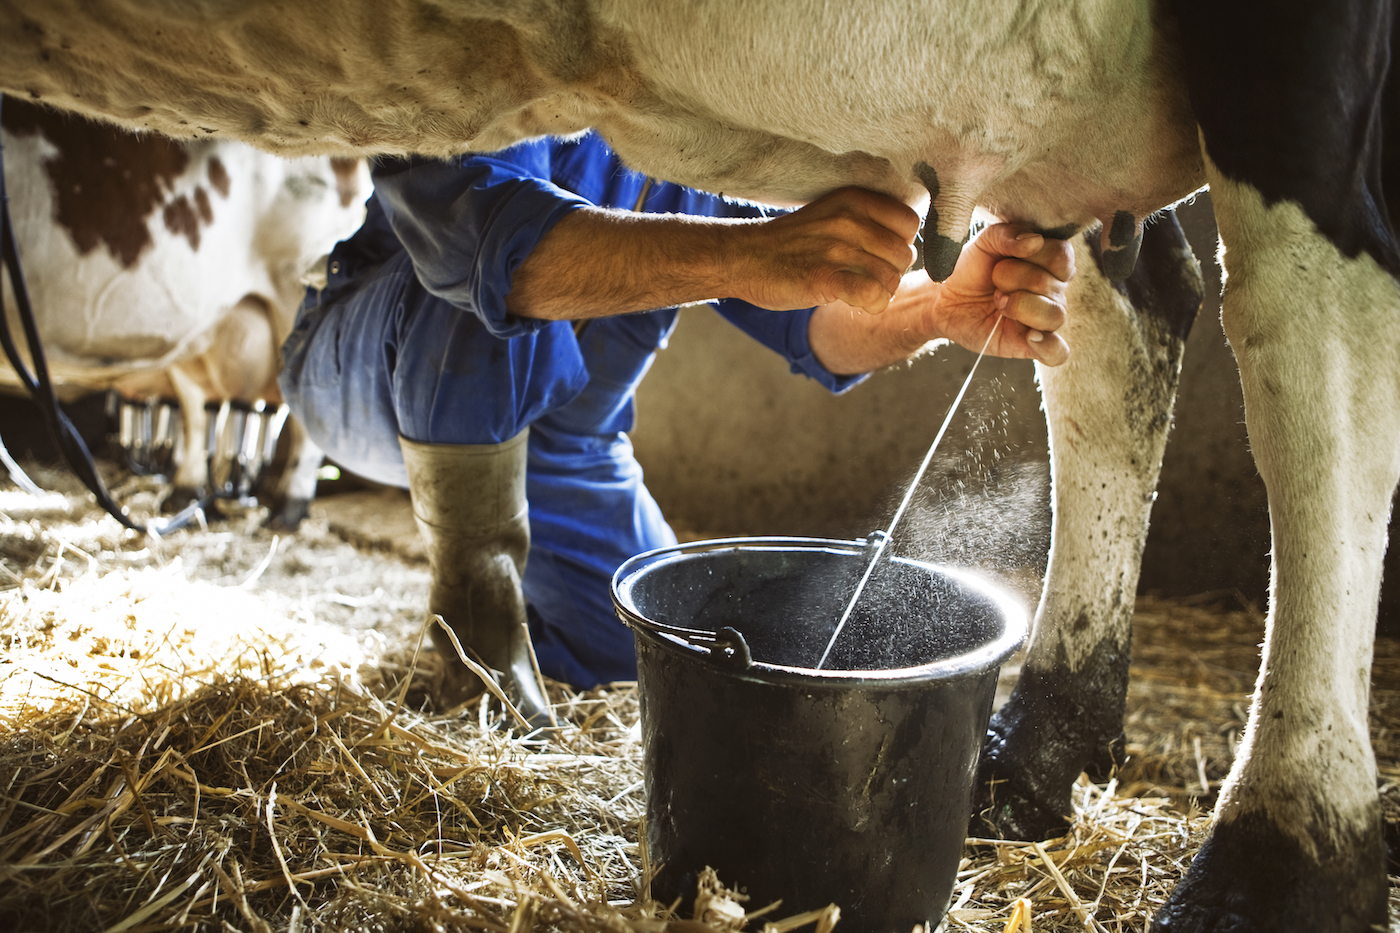 A person's hands milk a cow, milk shoots into a bucket